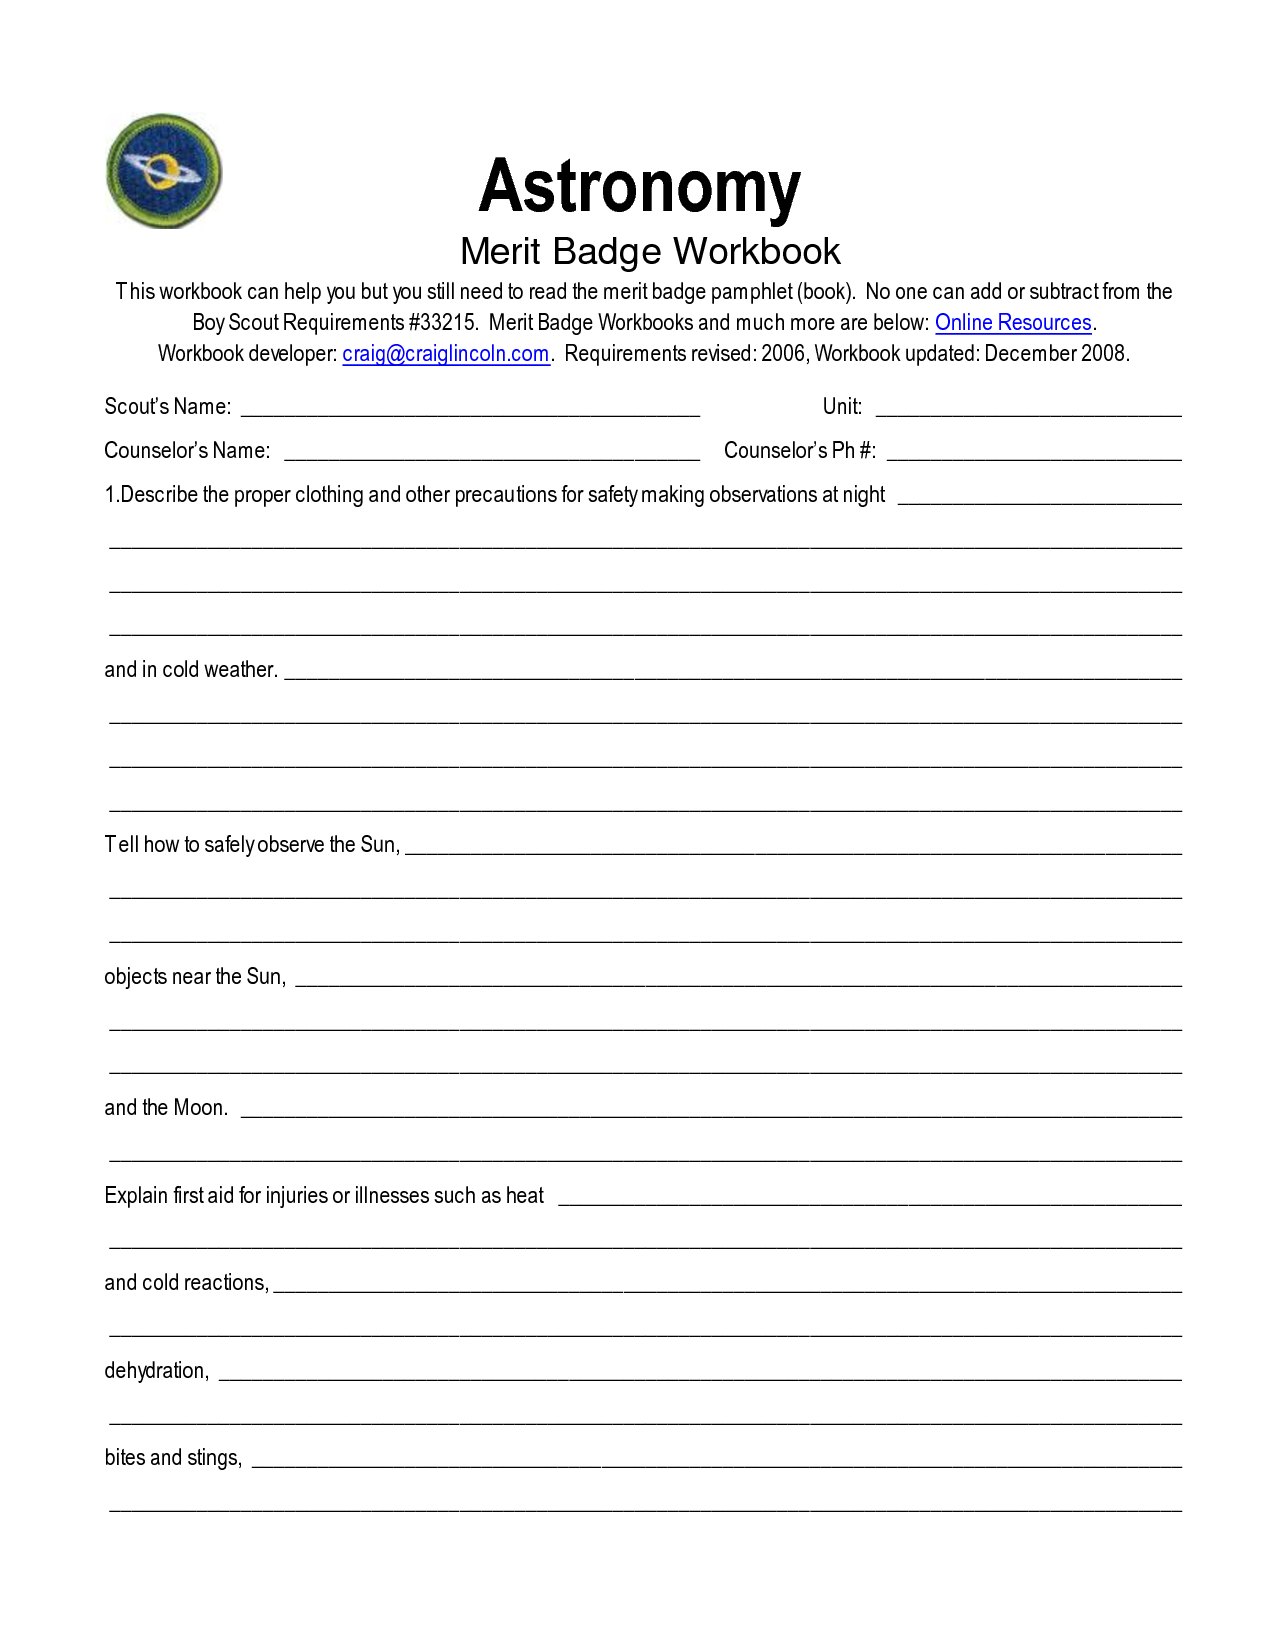 astronomy-merit-badge-worksheet-free-download-goodimg-co